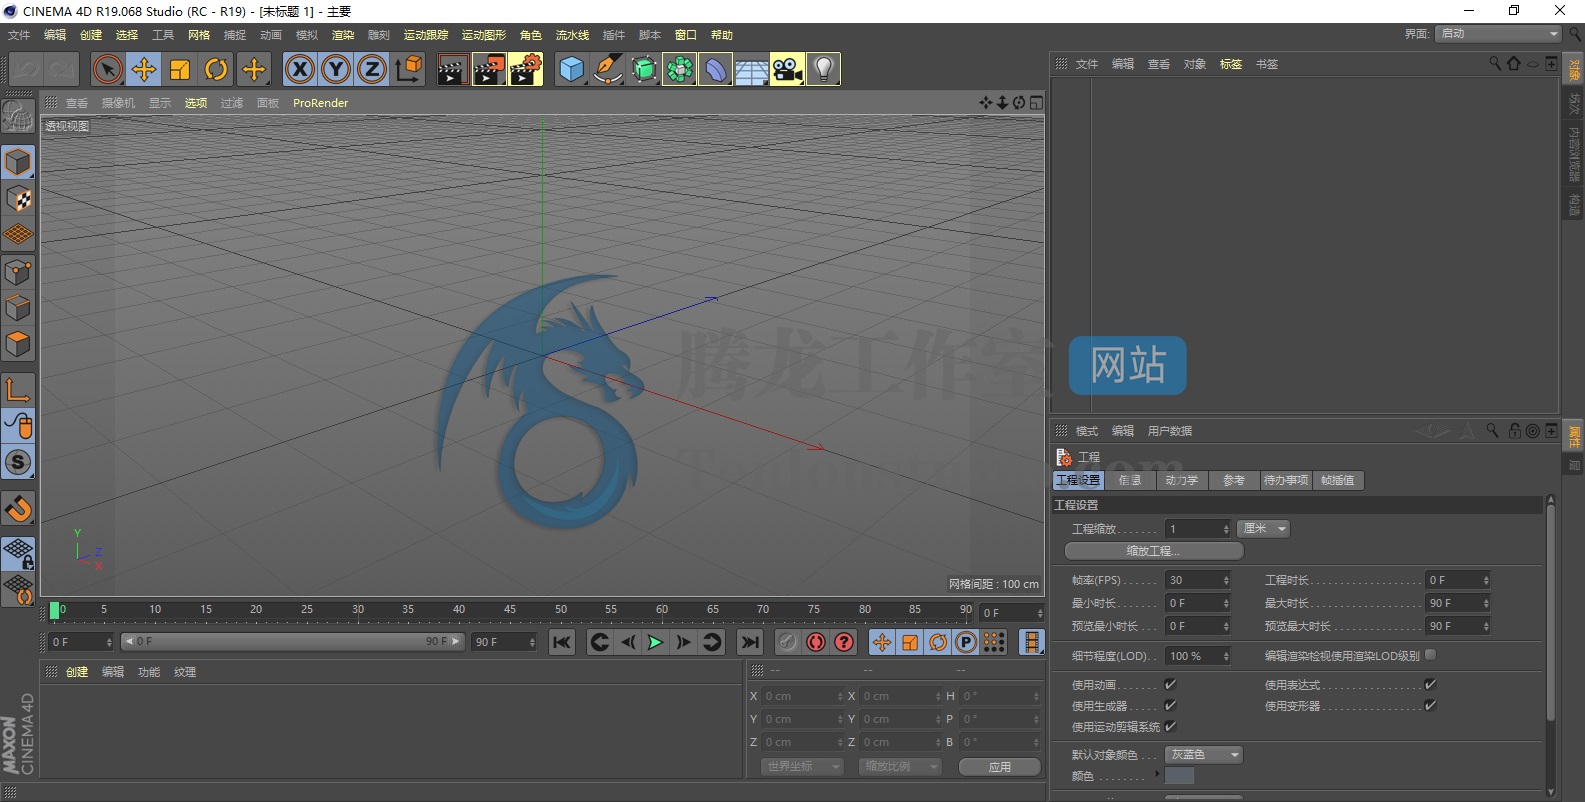 3D建模软件 Maxon CINEMA 4D Studio R19.068 破解版插图